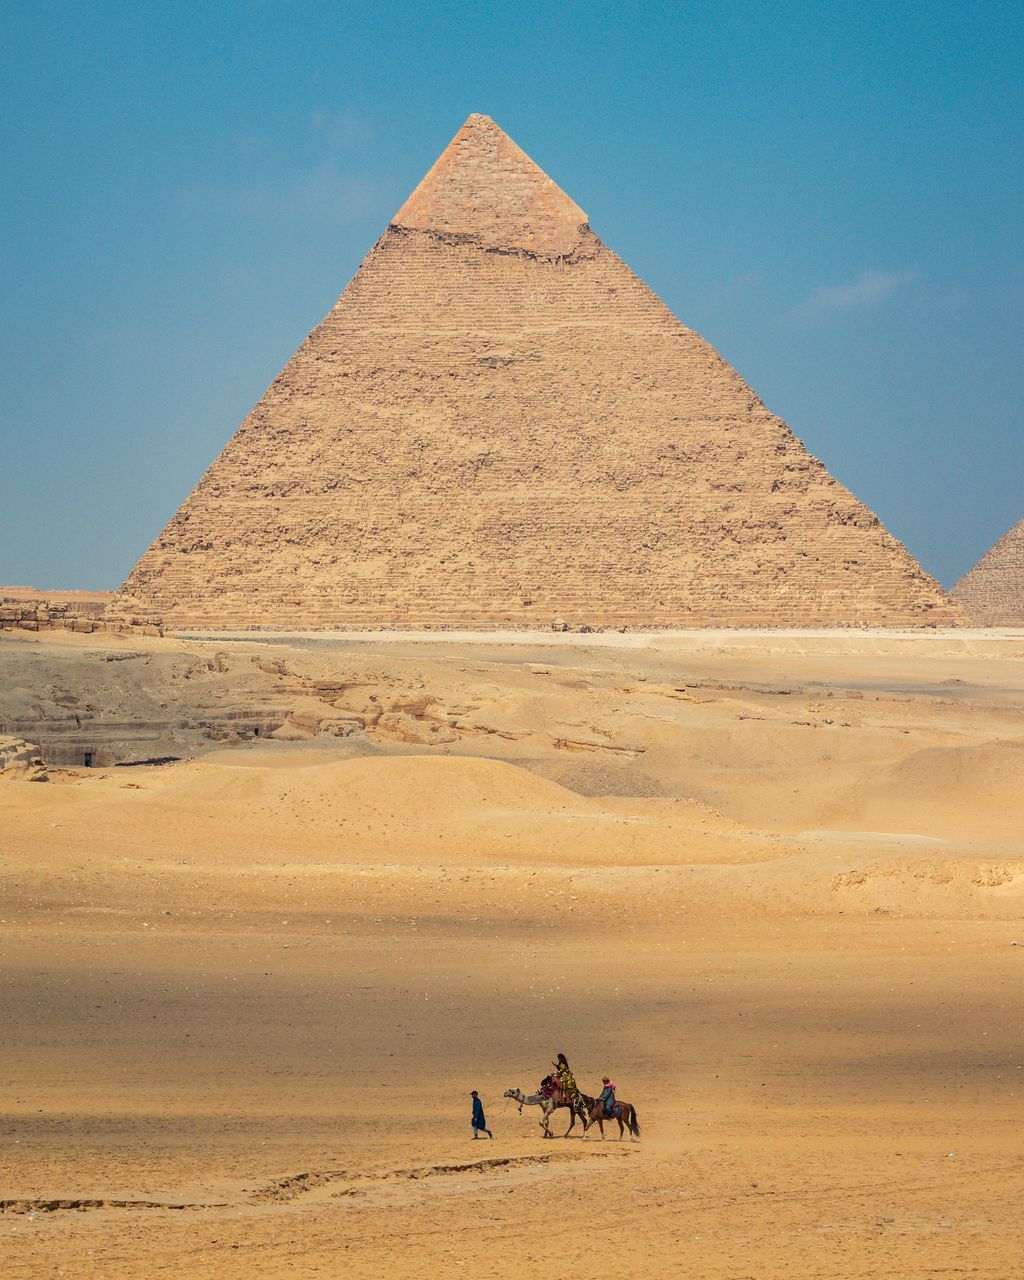 PEOPLE RIDING HORSE ON DESERT